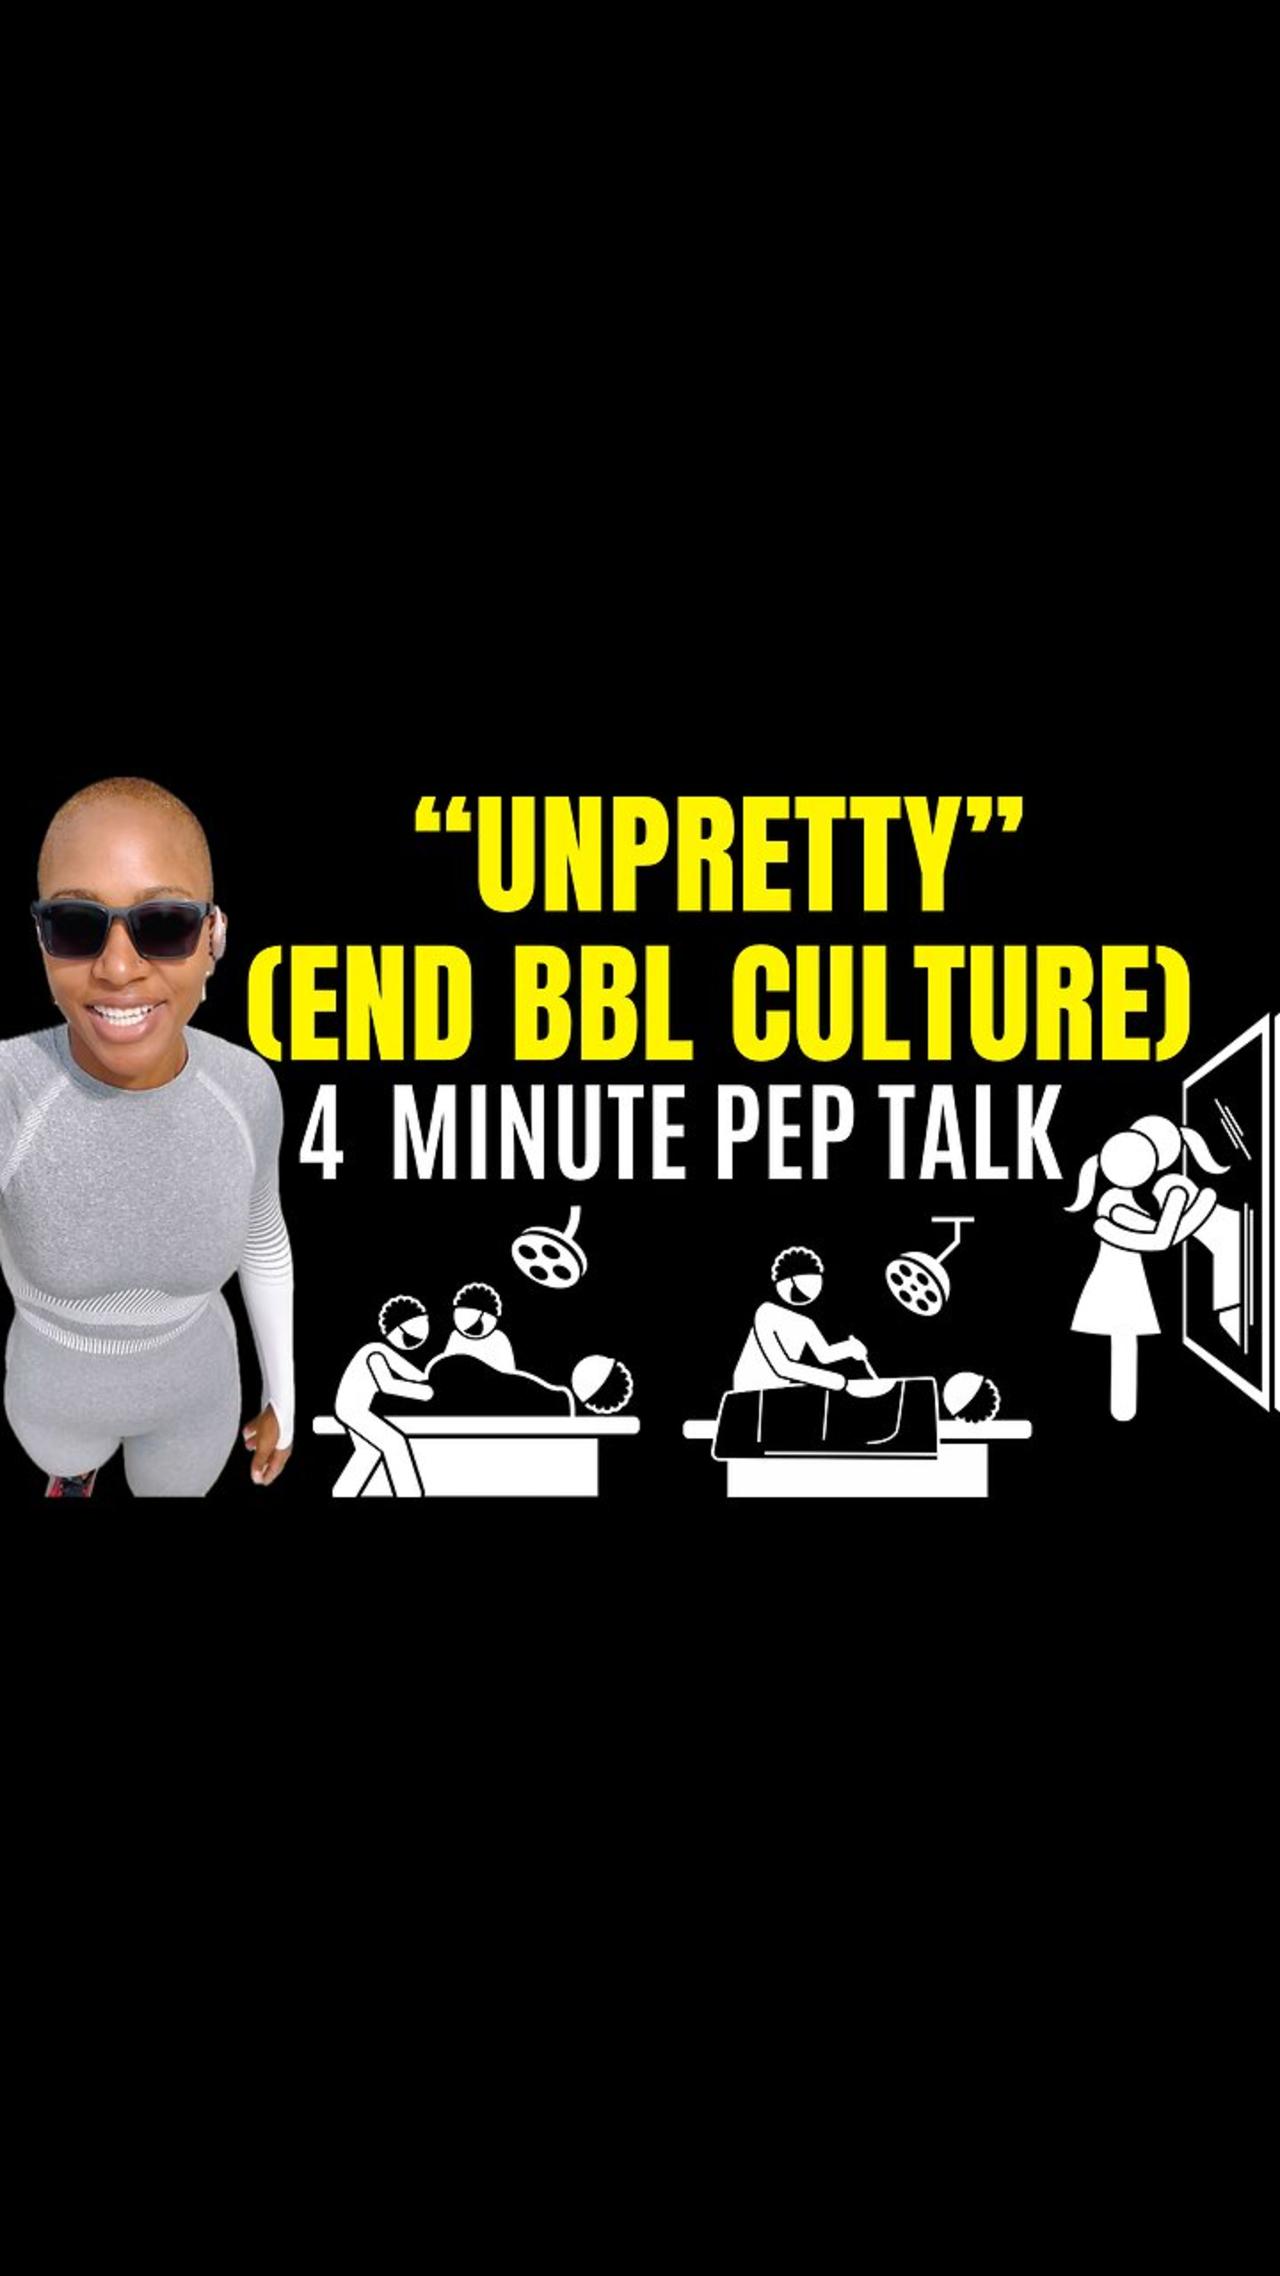 UNPRETTY (End BBL Culture) 4 Minute Motivational Pep Talk